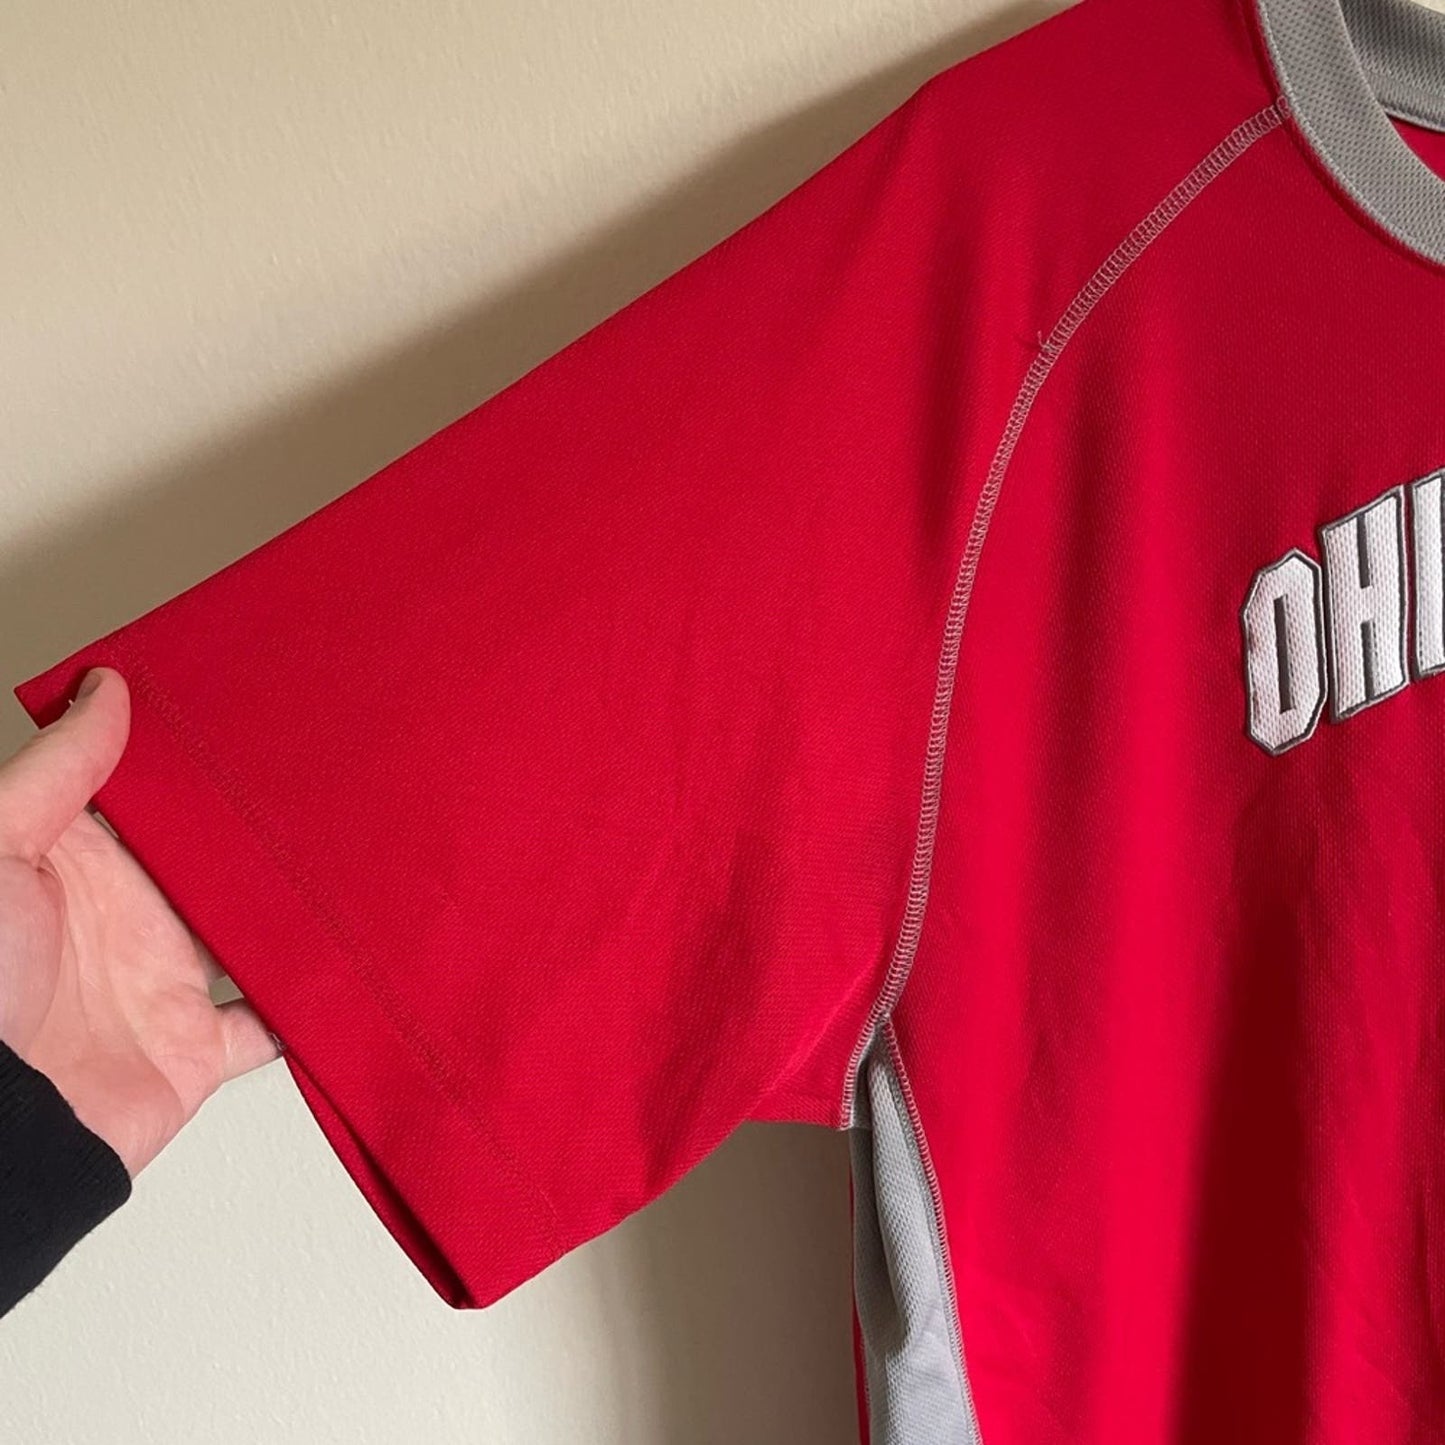 Nike Ohio State Buckeyes Vintage Y2K NCAA Basketball Warm-Up Shirt